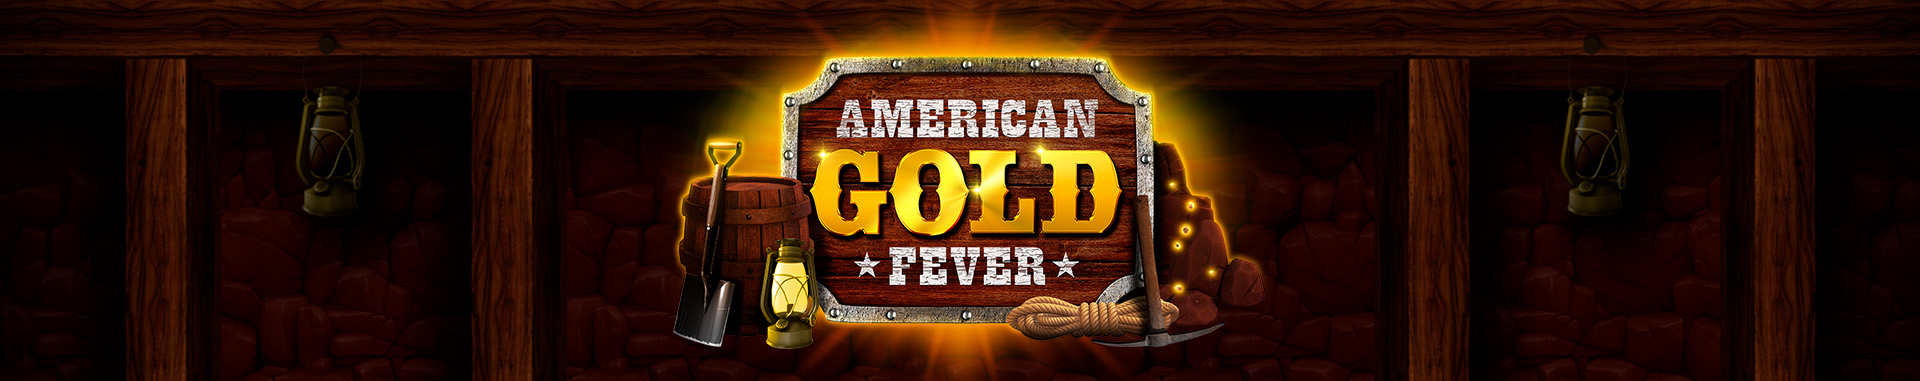 Video Bingo American Gold Fever